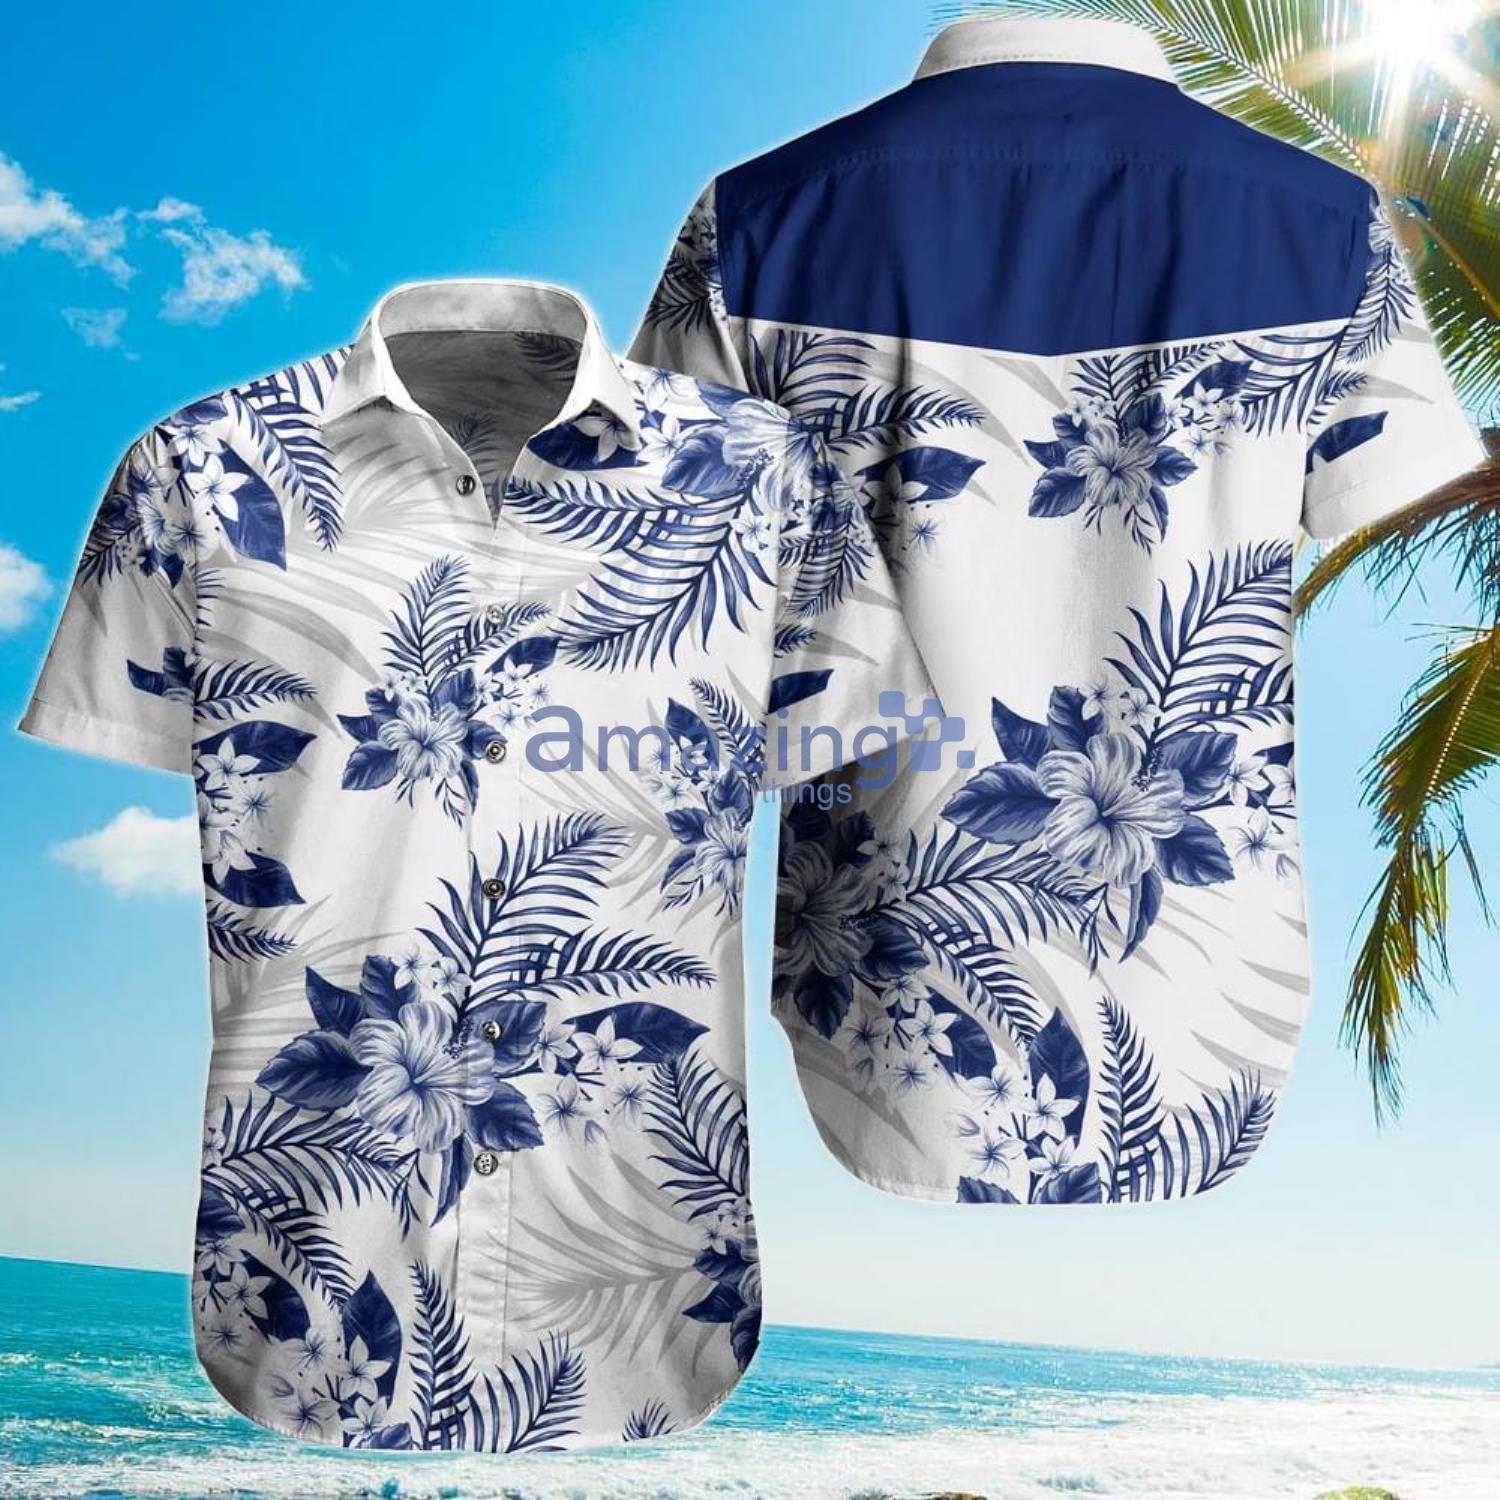 New York Giants NFL Hawaiian Shirt Sandalstime Aloha Shirt